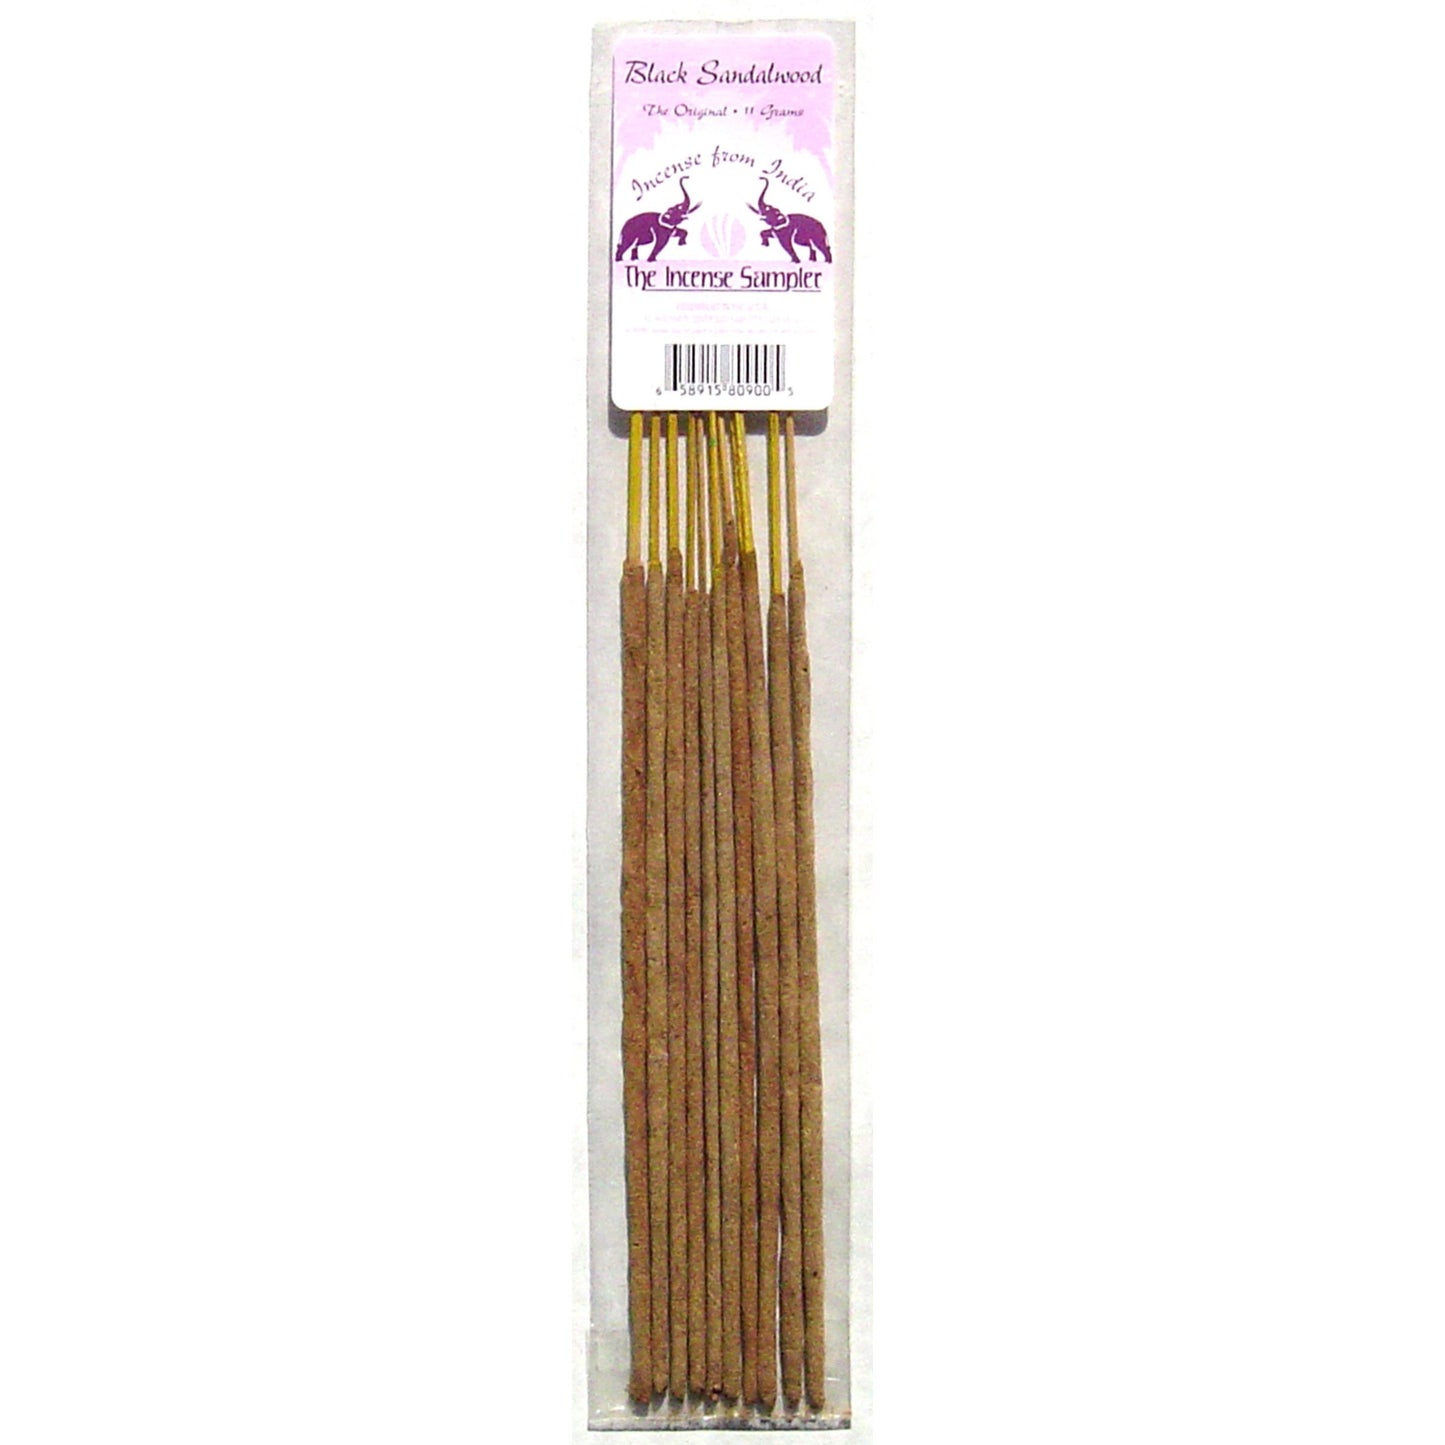 Incense From India - Black Sandalwood